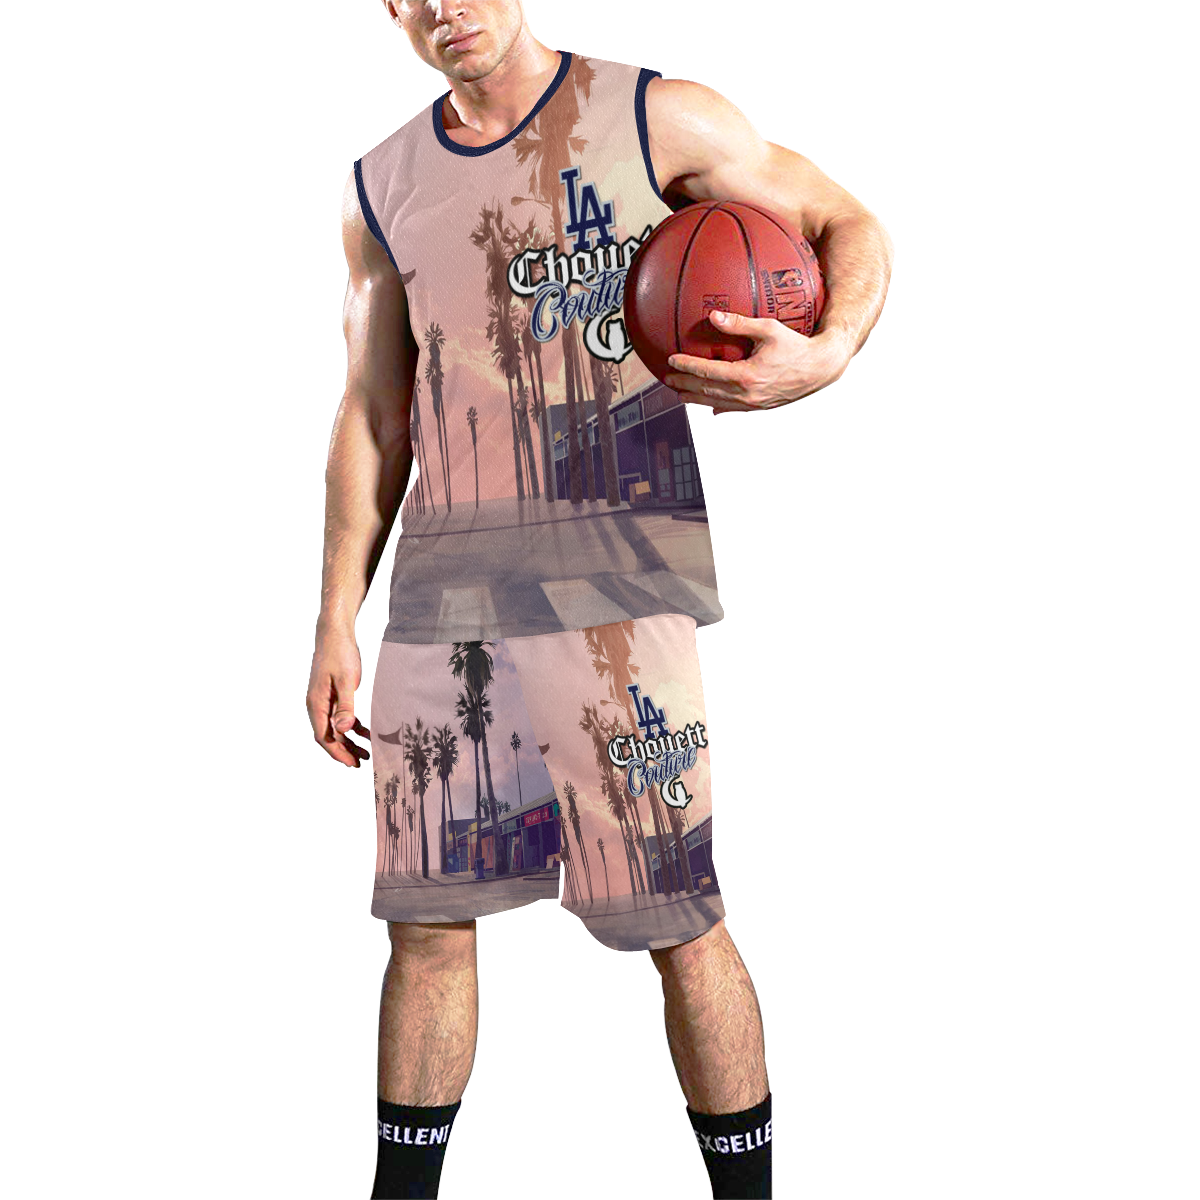 LACHOUETT WESTCOAST All Over Print Basketball Uniform